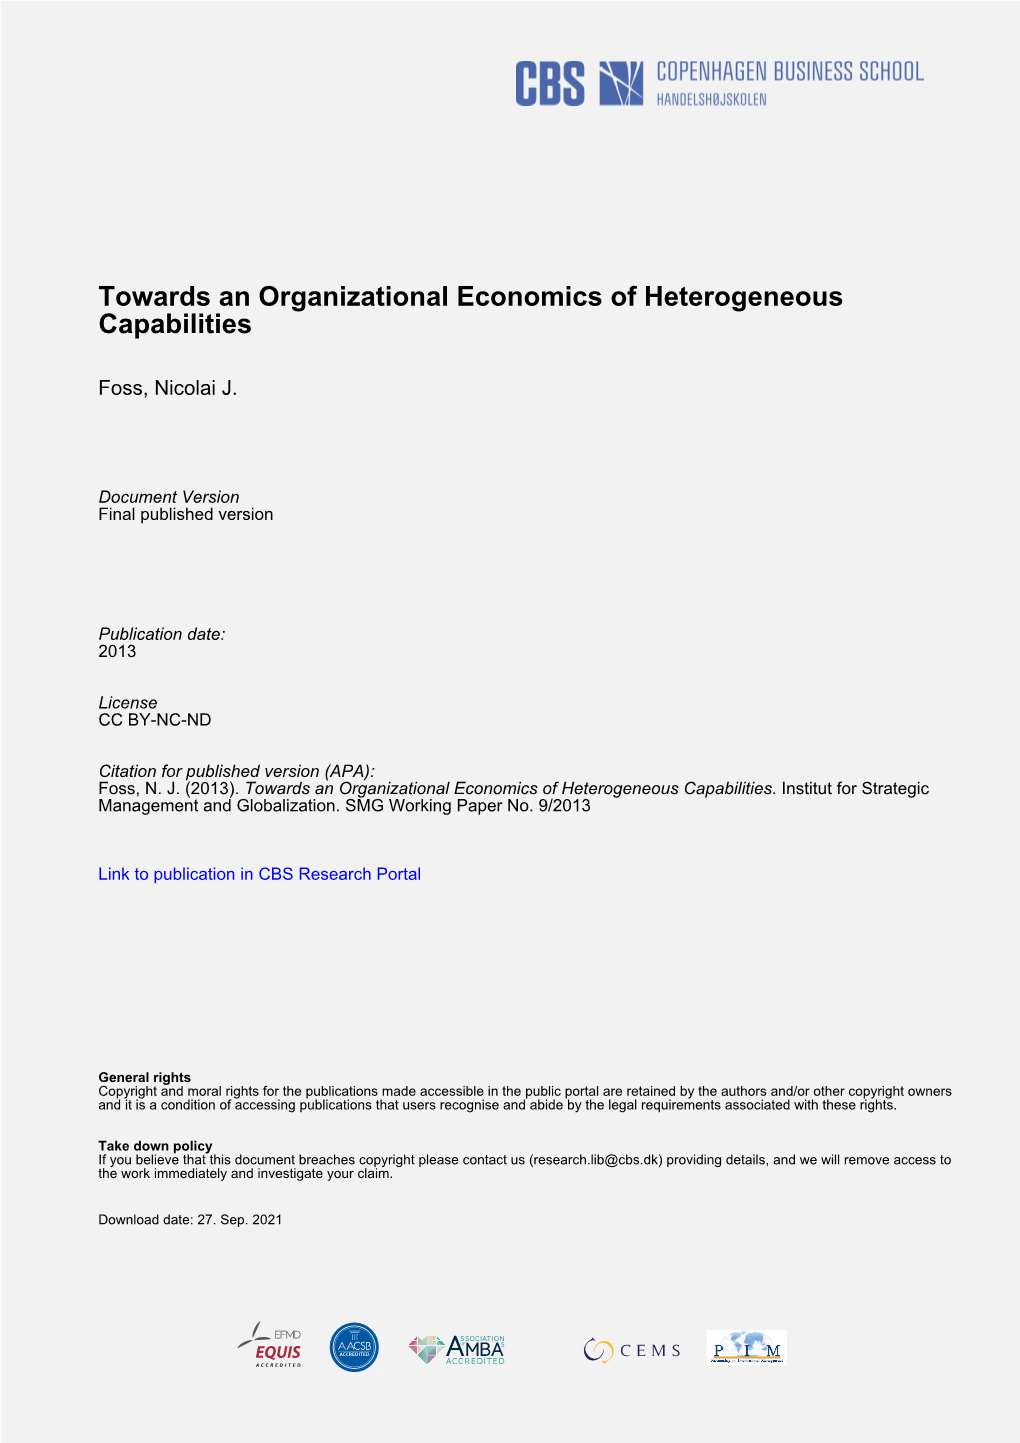 Towards an Organizational Economics of Heterogeneous Capabilities